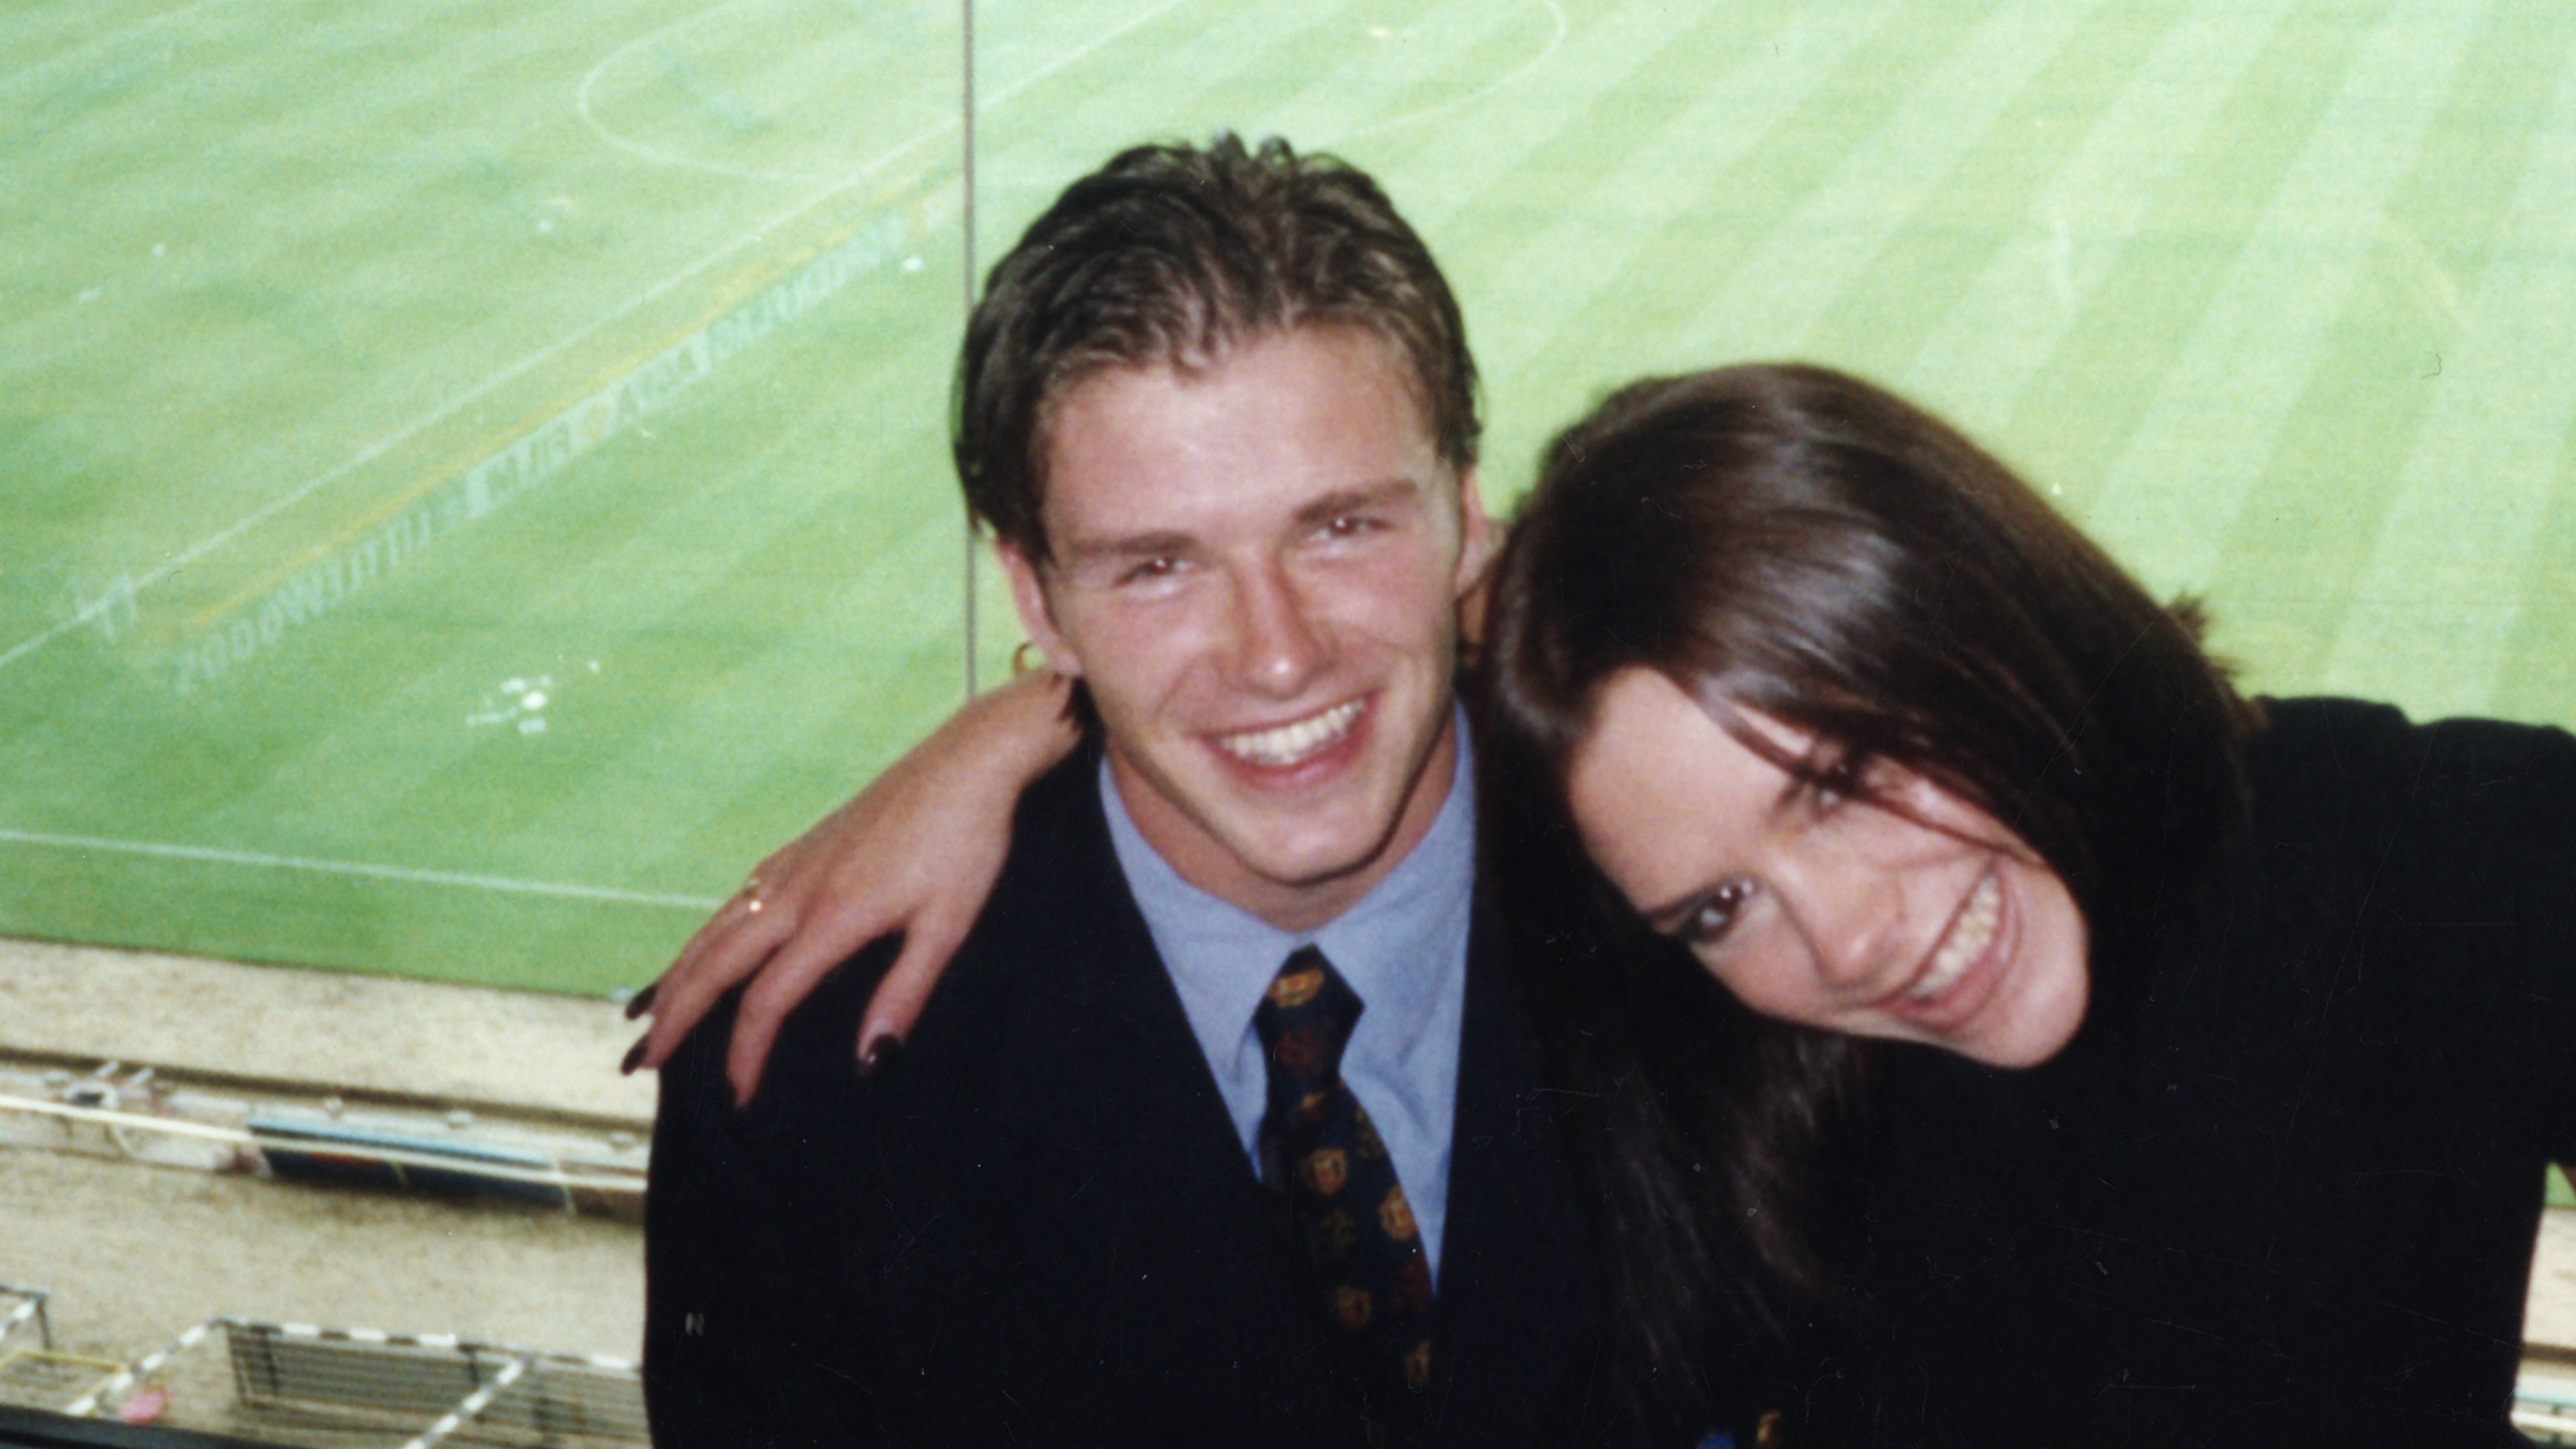 A still from “Beckham” shows Beckham with his future wife Victoria “Posh Spice” Adams. Photo: Netflix